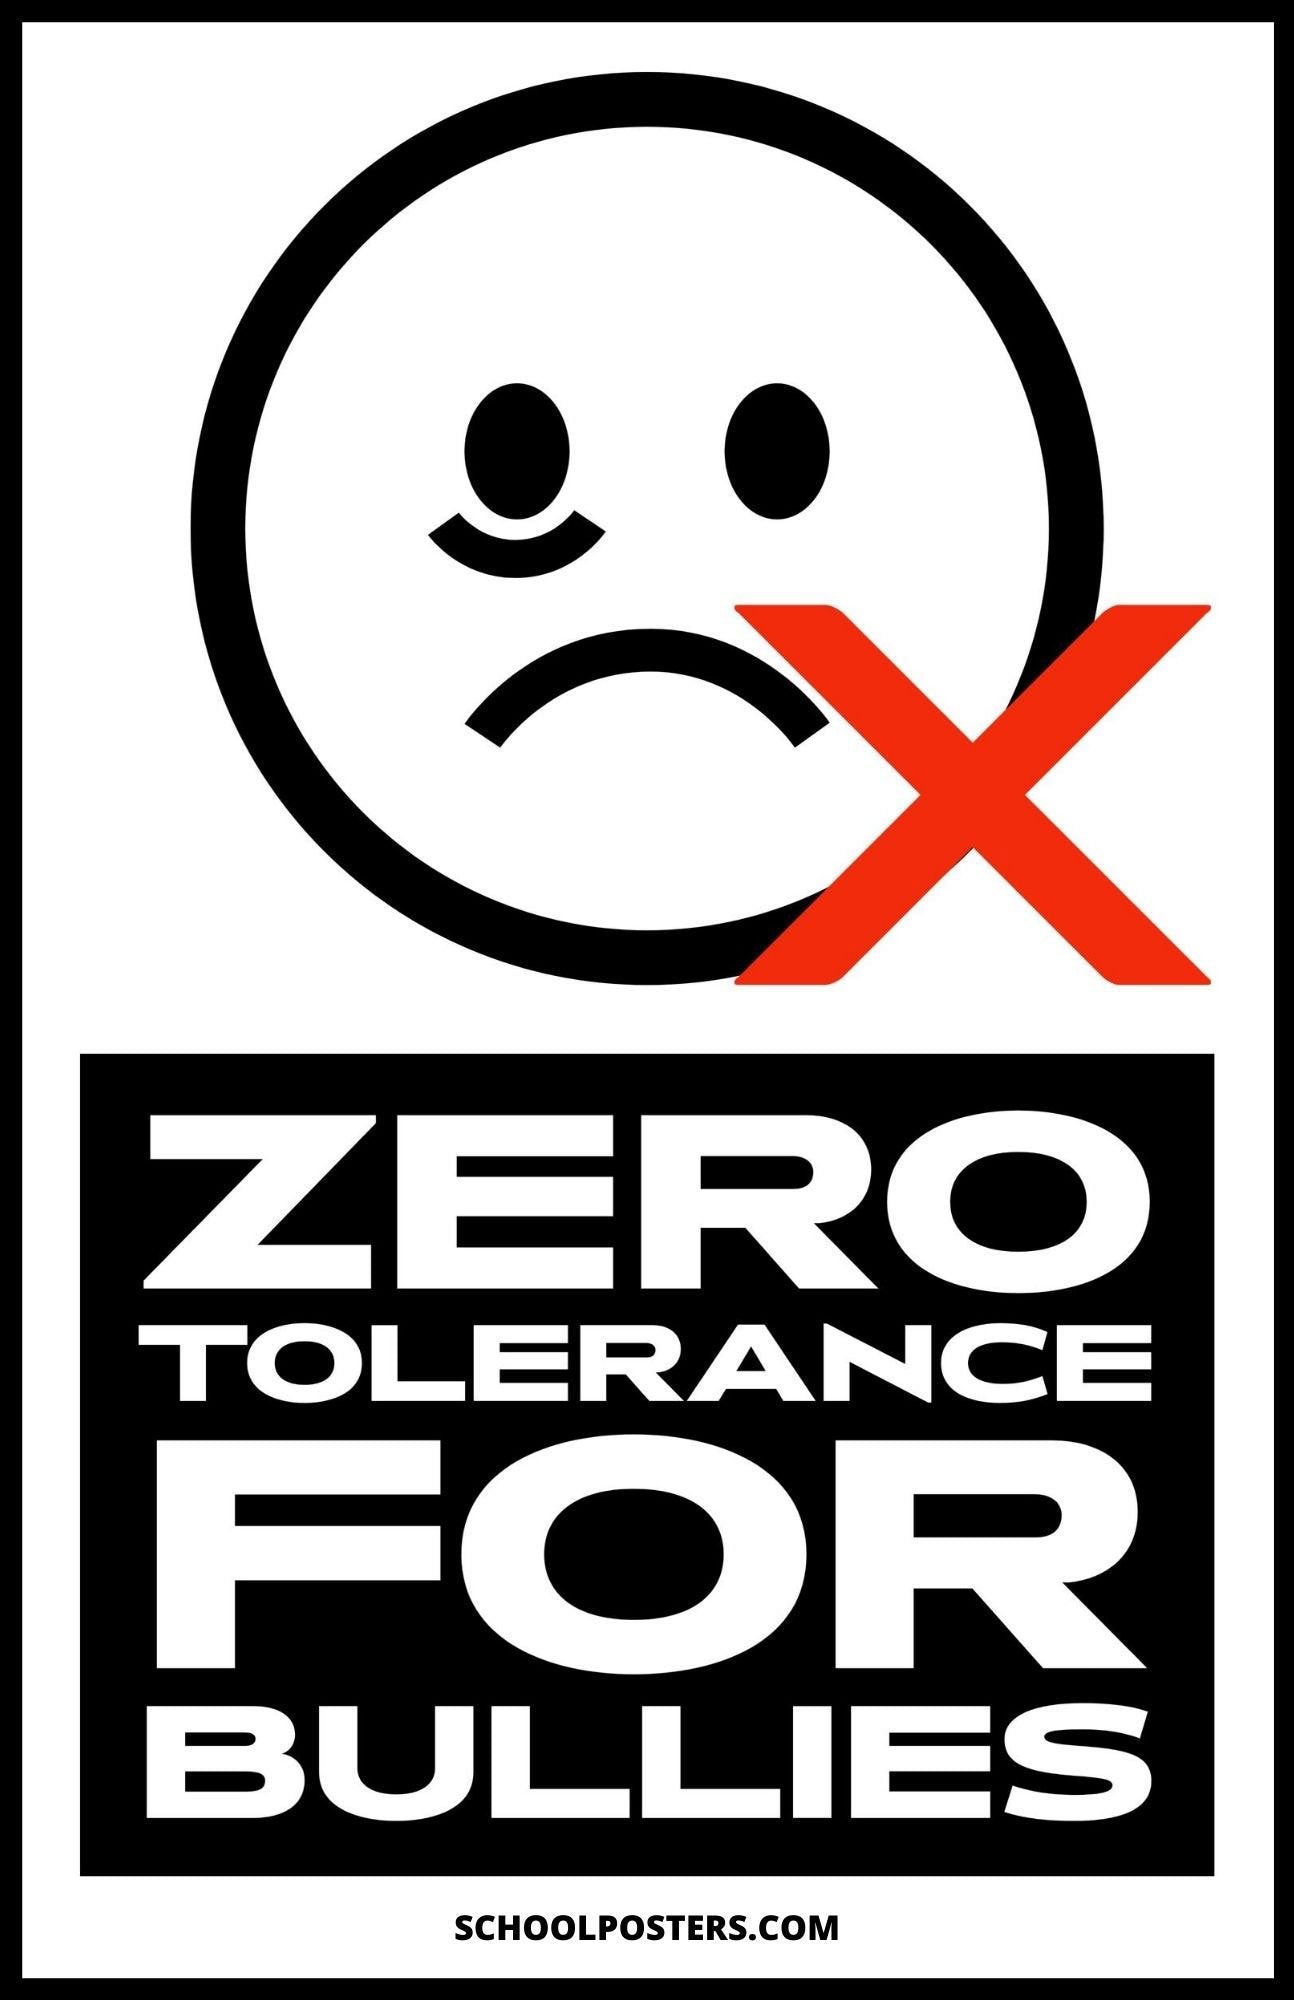 Zero Tolerance For Bullies Poster